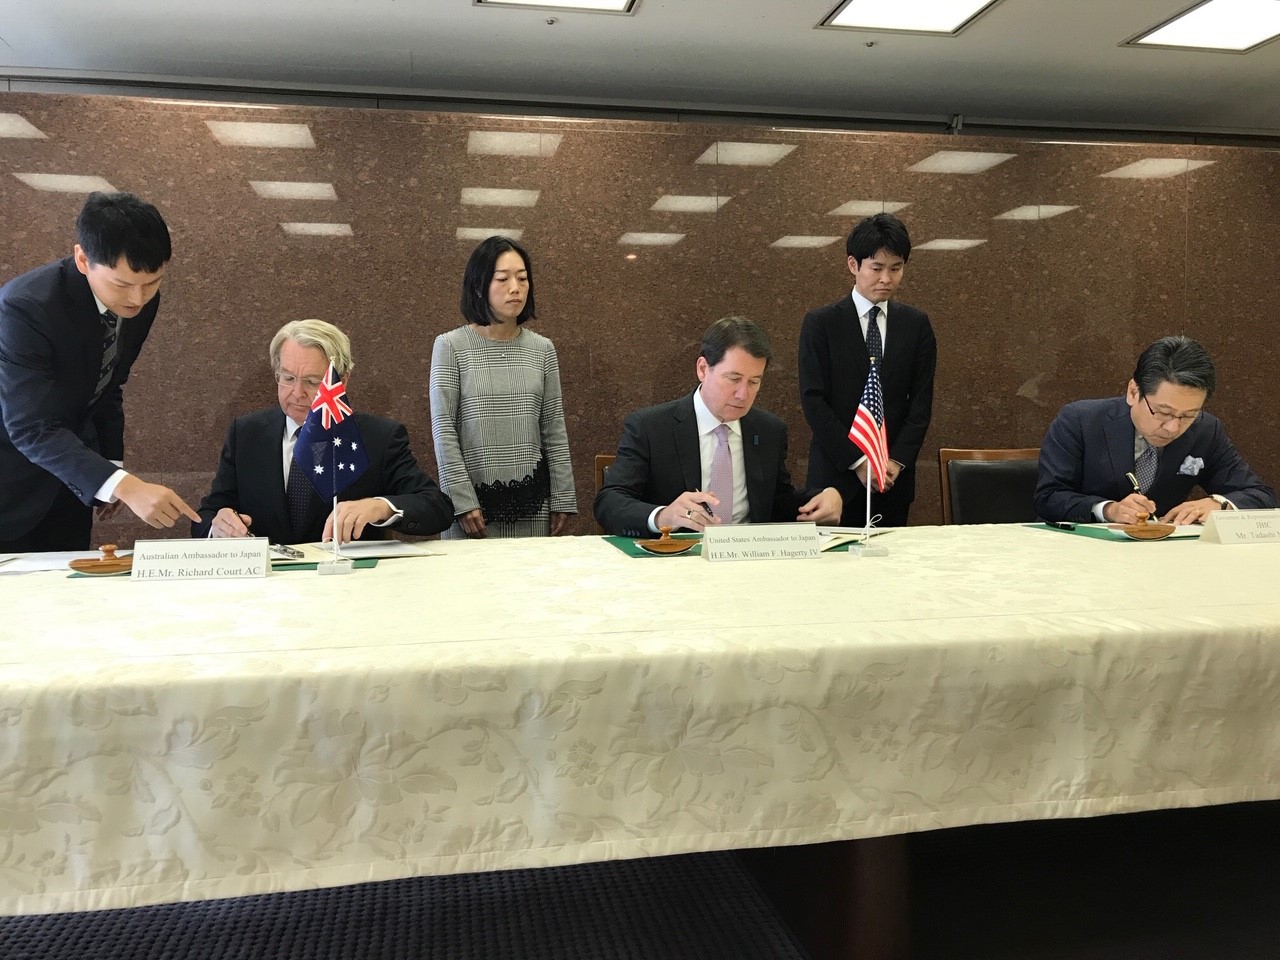 photo US Ambassador to Japan William Hagerty, JBIC Governor Tadashi Maeda, Australian Ambassador to Japan Richard Court sign memorandum of understanding